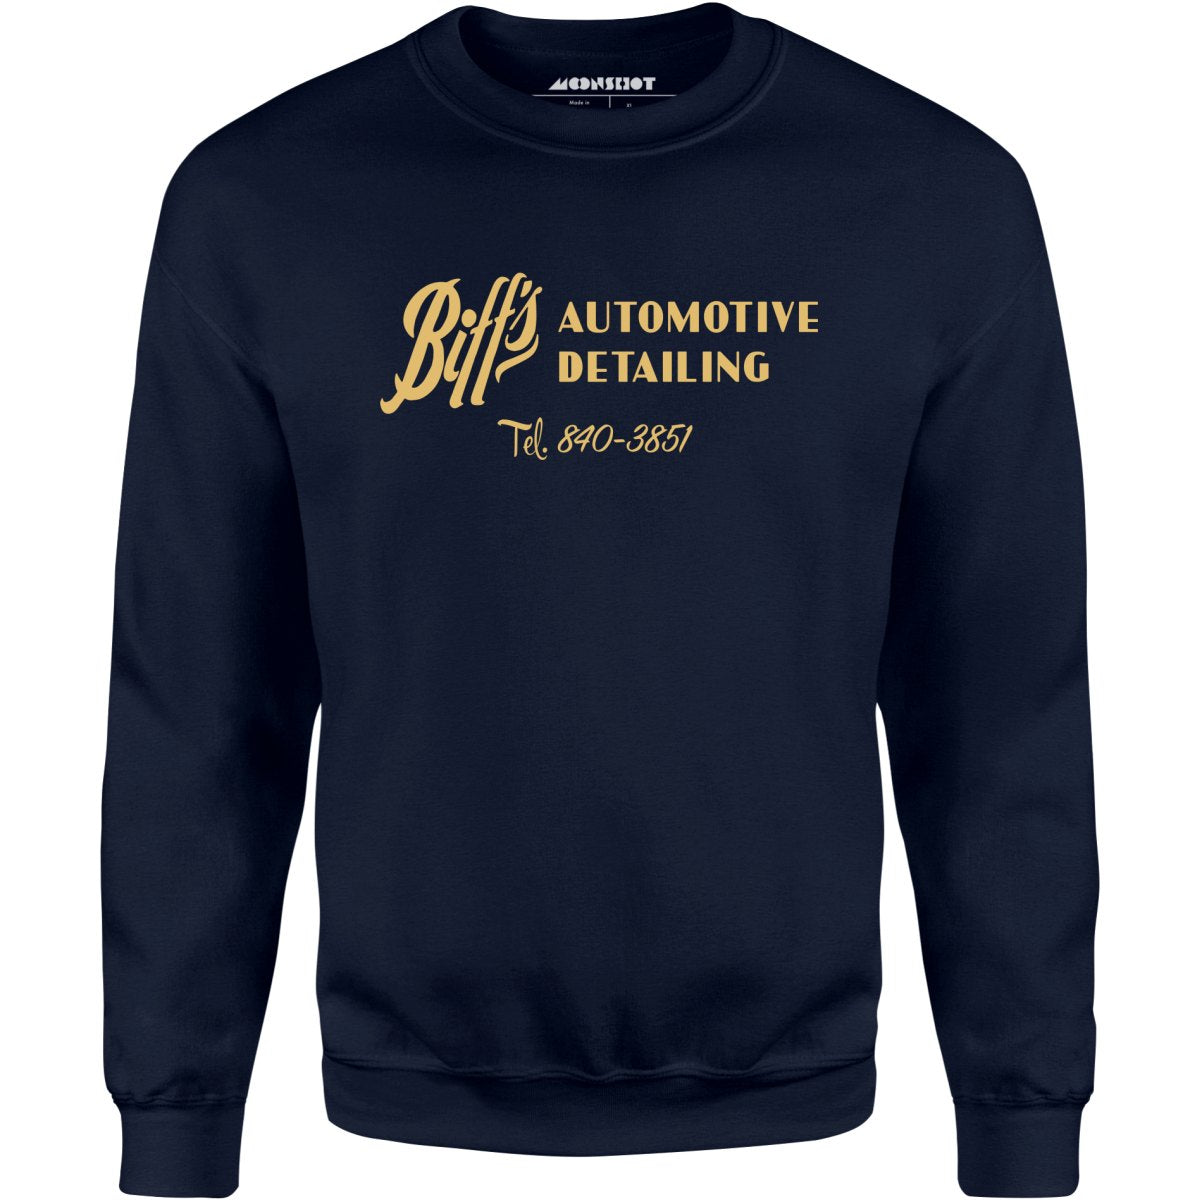 Biff's Automotive Detailing - Unisex Sweatshirt